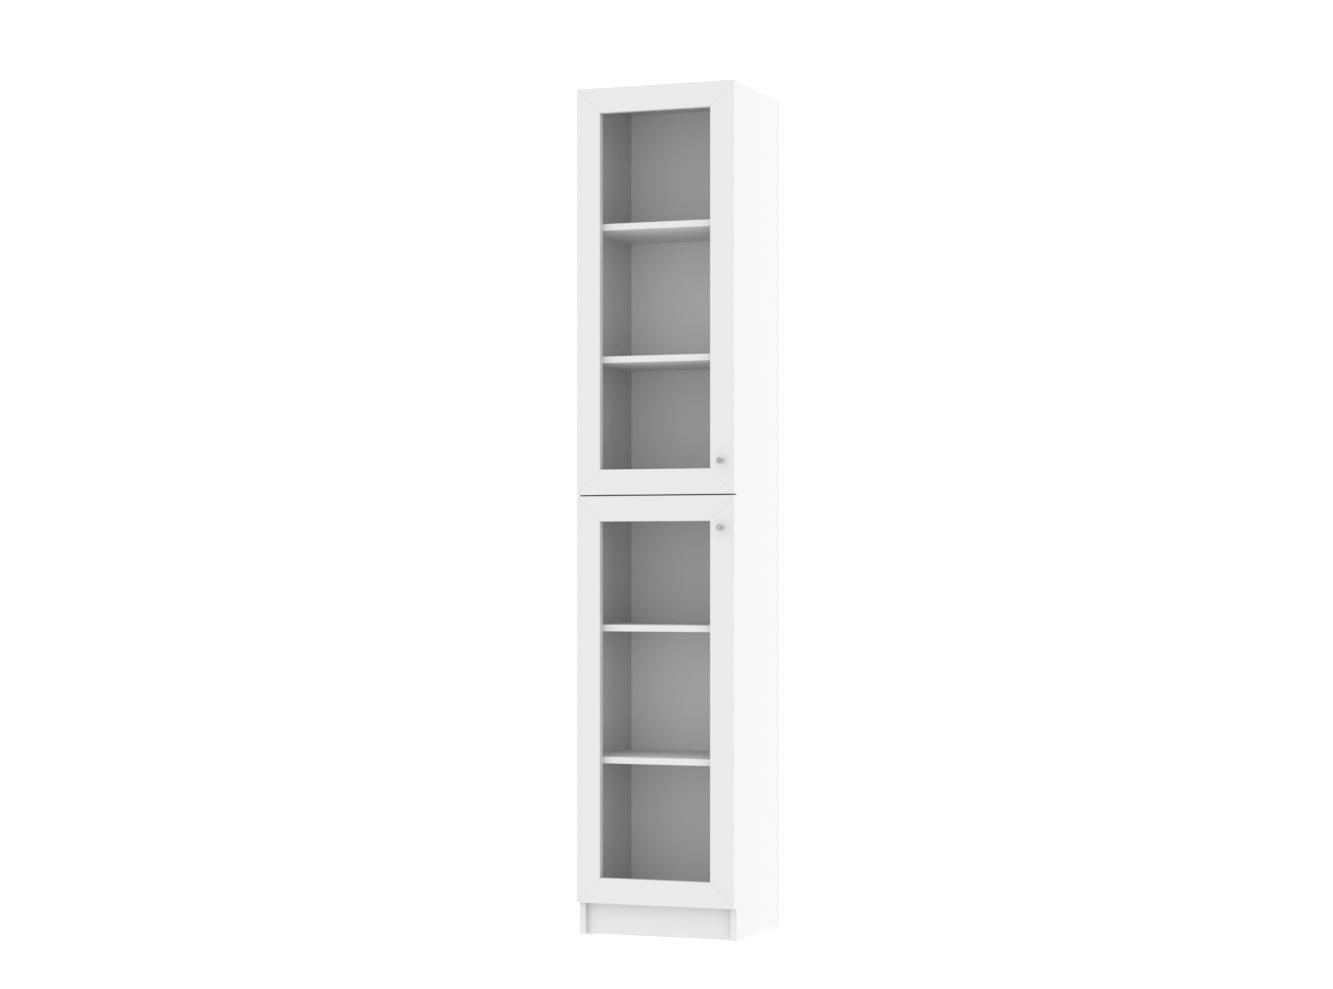  Книжный шкаф Билли 331 white ИКЕА (IKEA) изображение товара